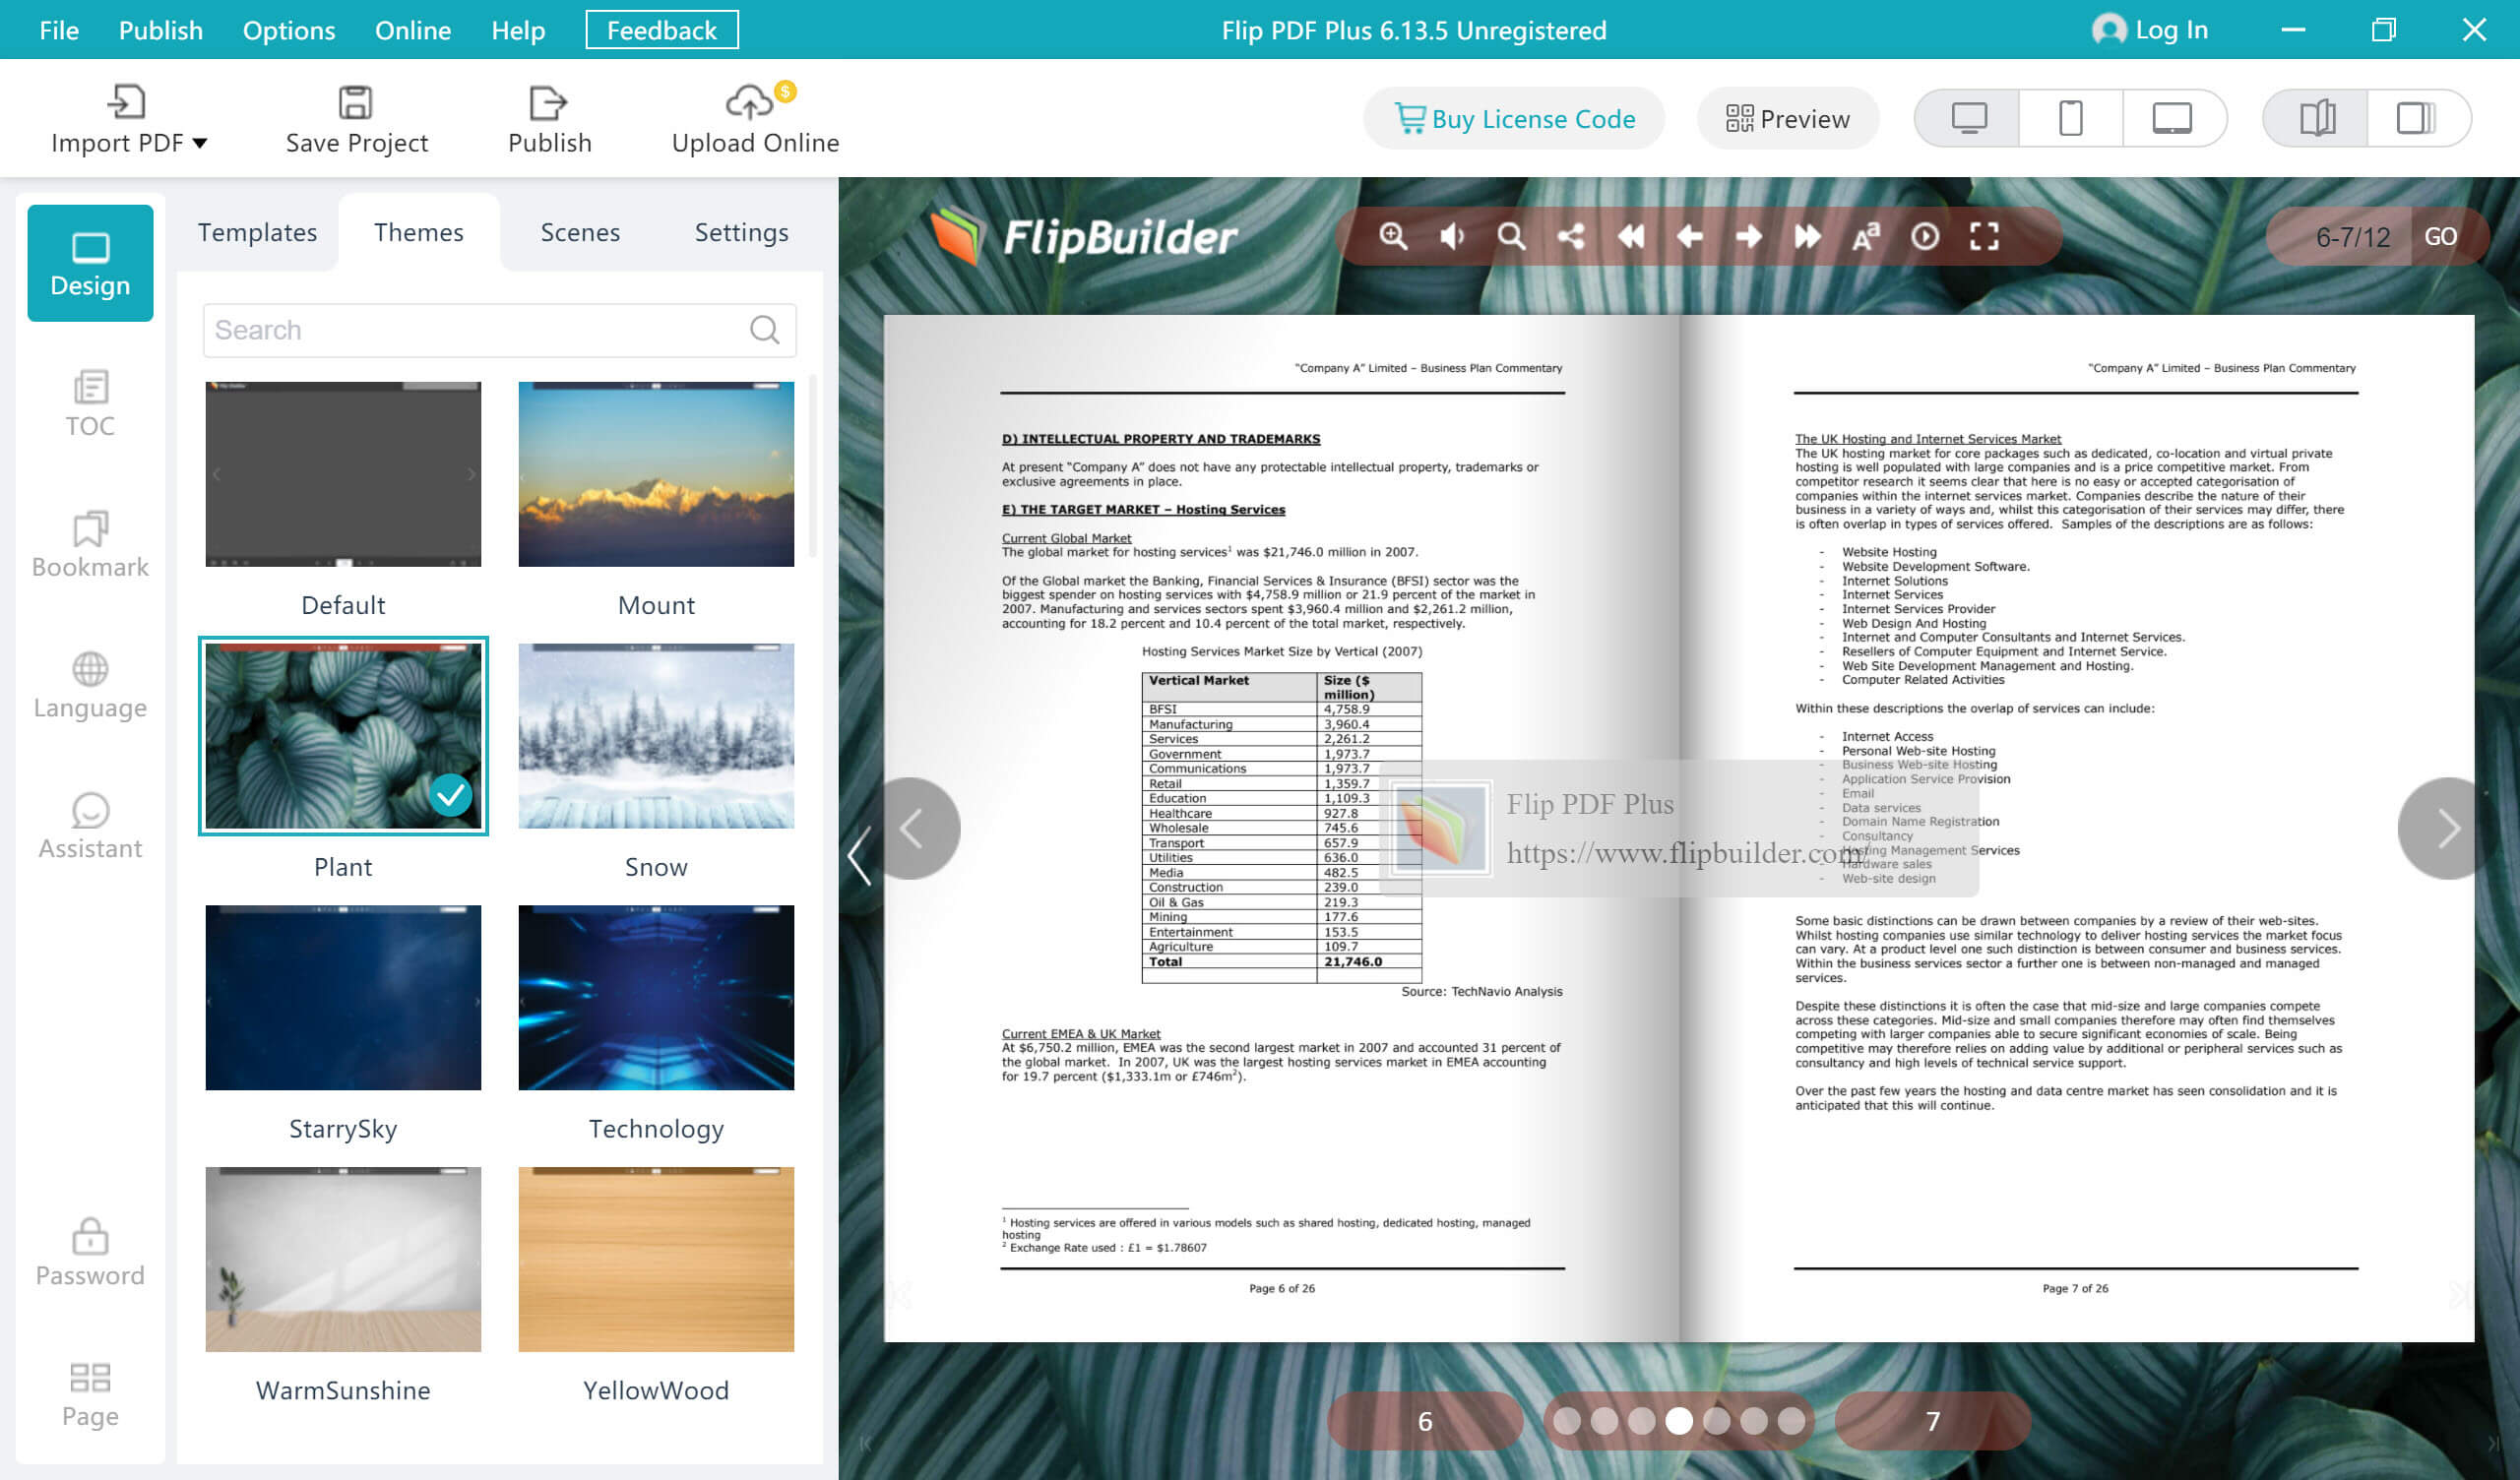 Customize the Design of the Flipbook in Flip PDF Plus